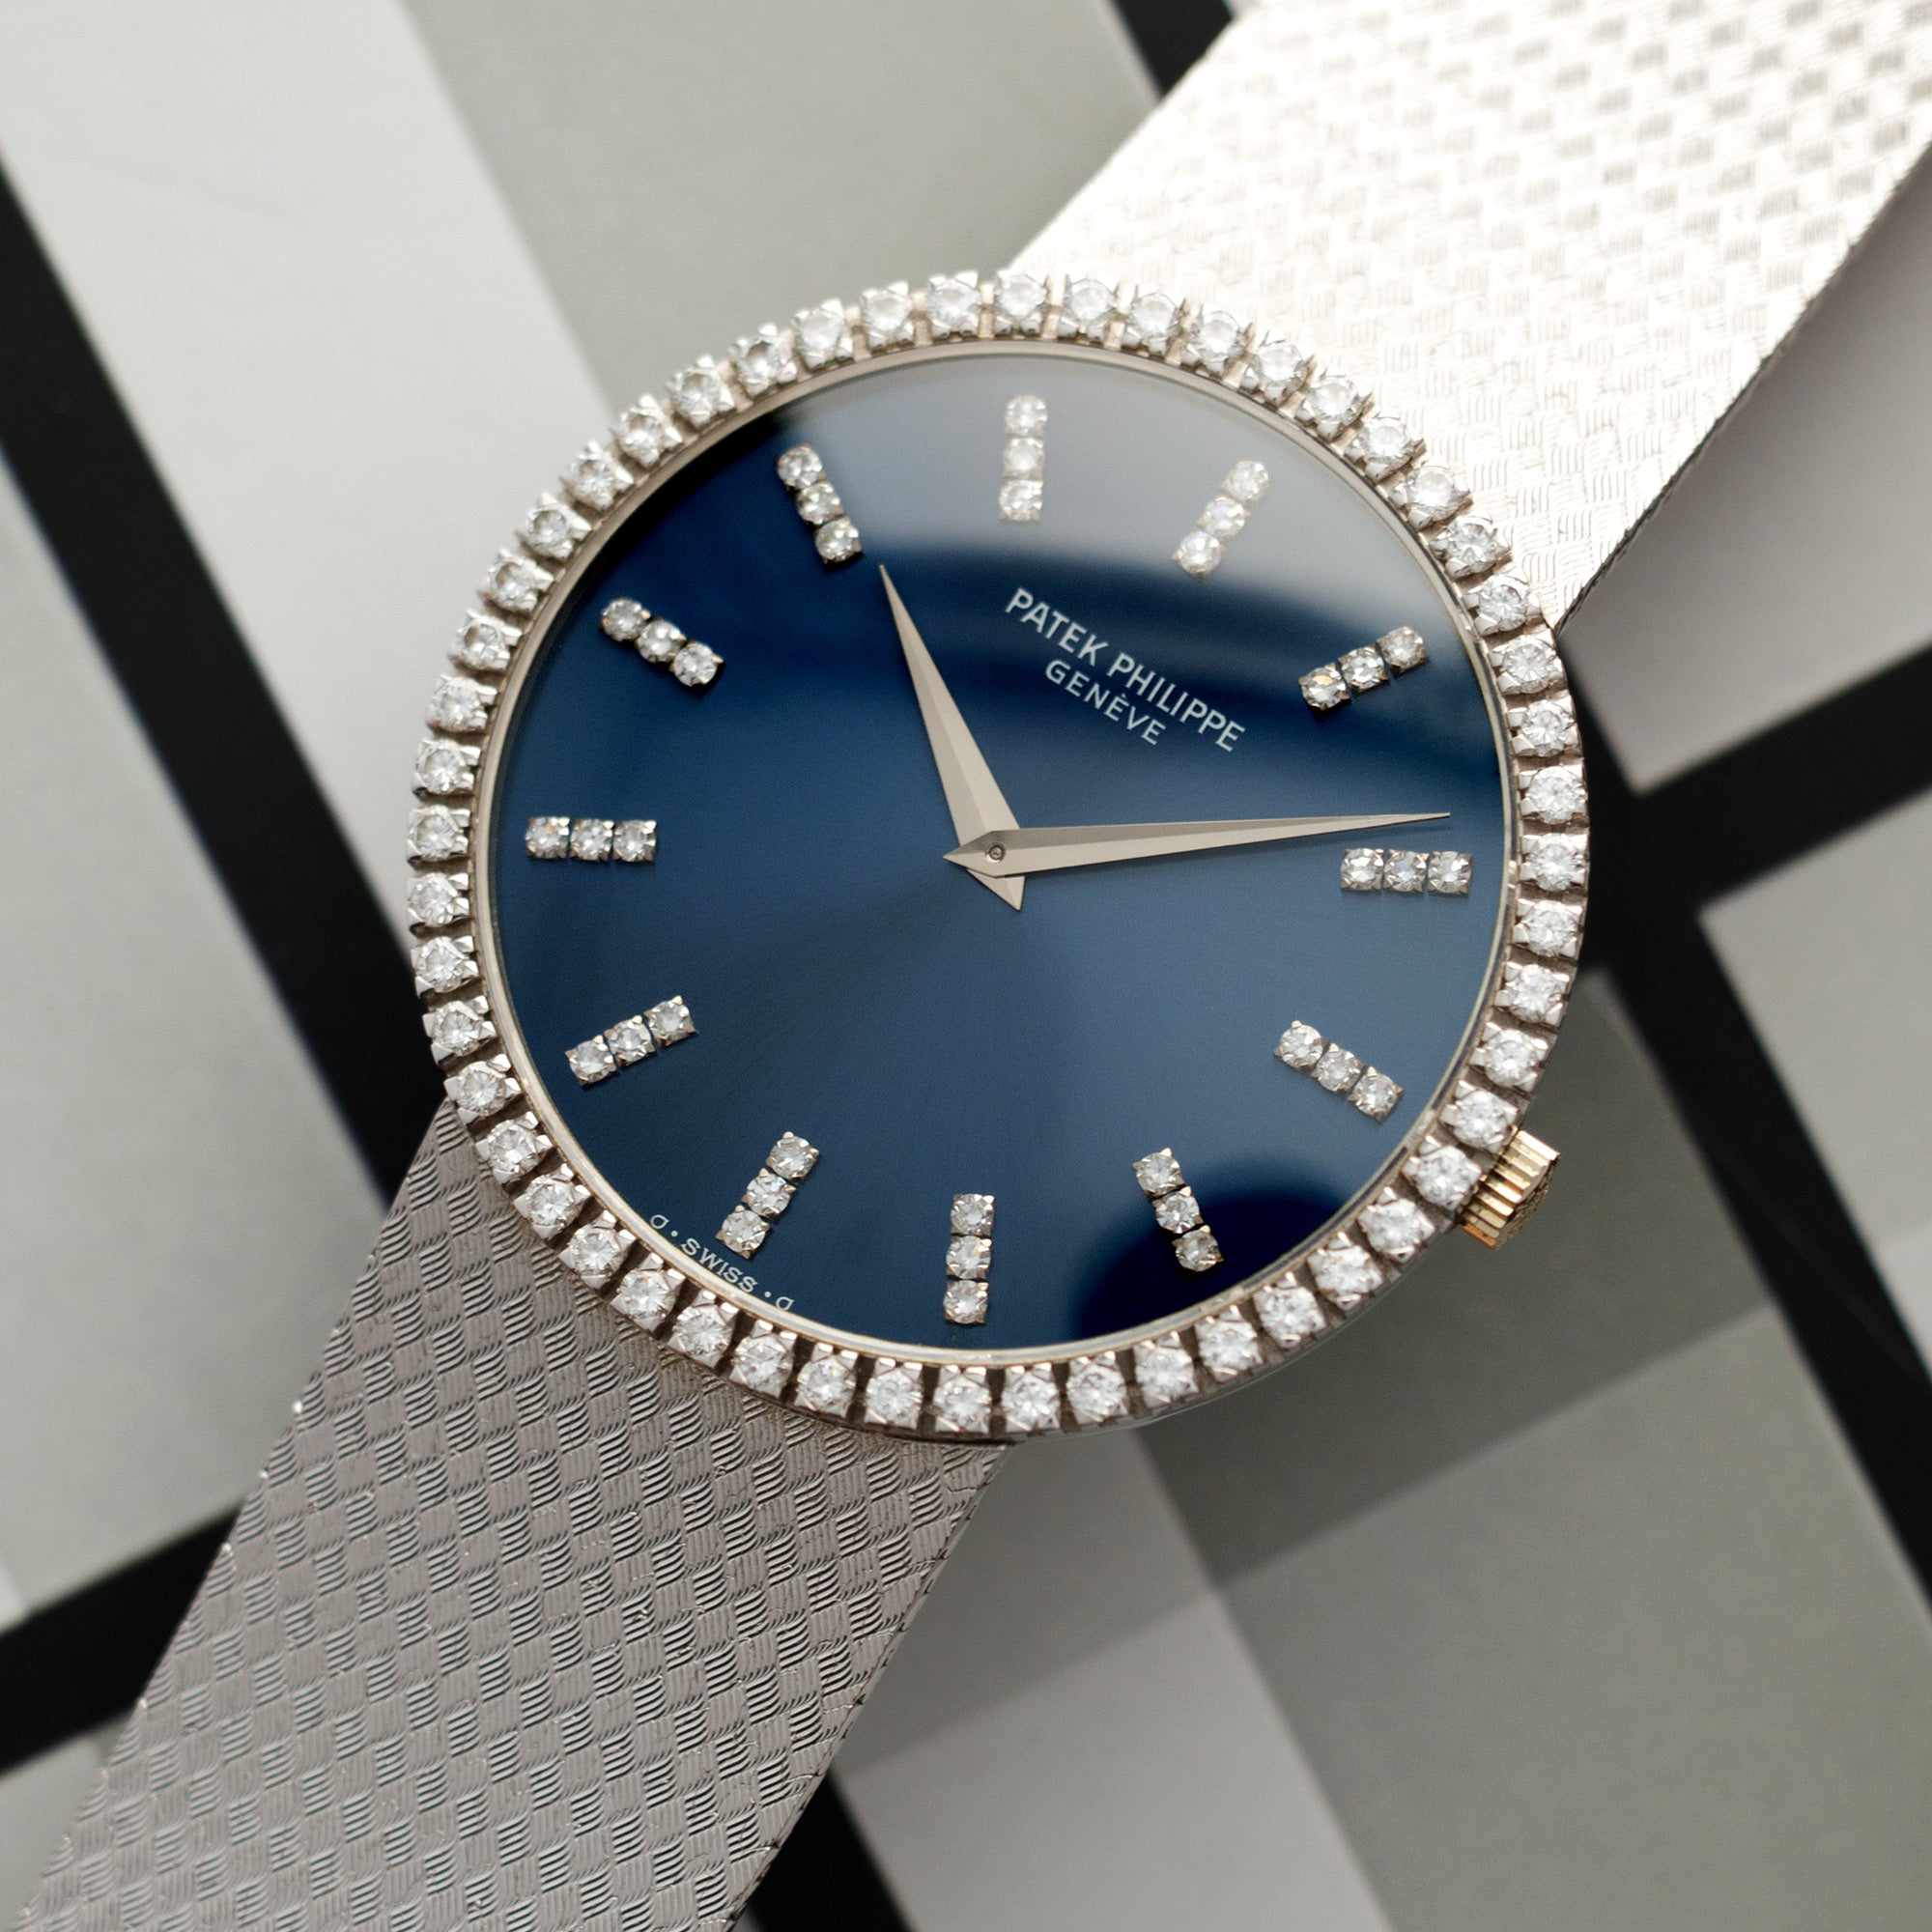 Patek Philippe - Patek Philippe White Gold Calatrava Watch Ref. 3759 with Original Diamond Bezel and Dial - The Keystone Watches